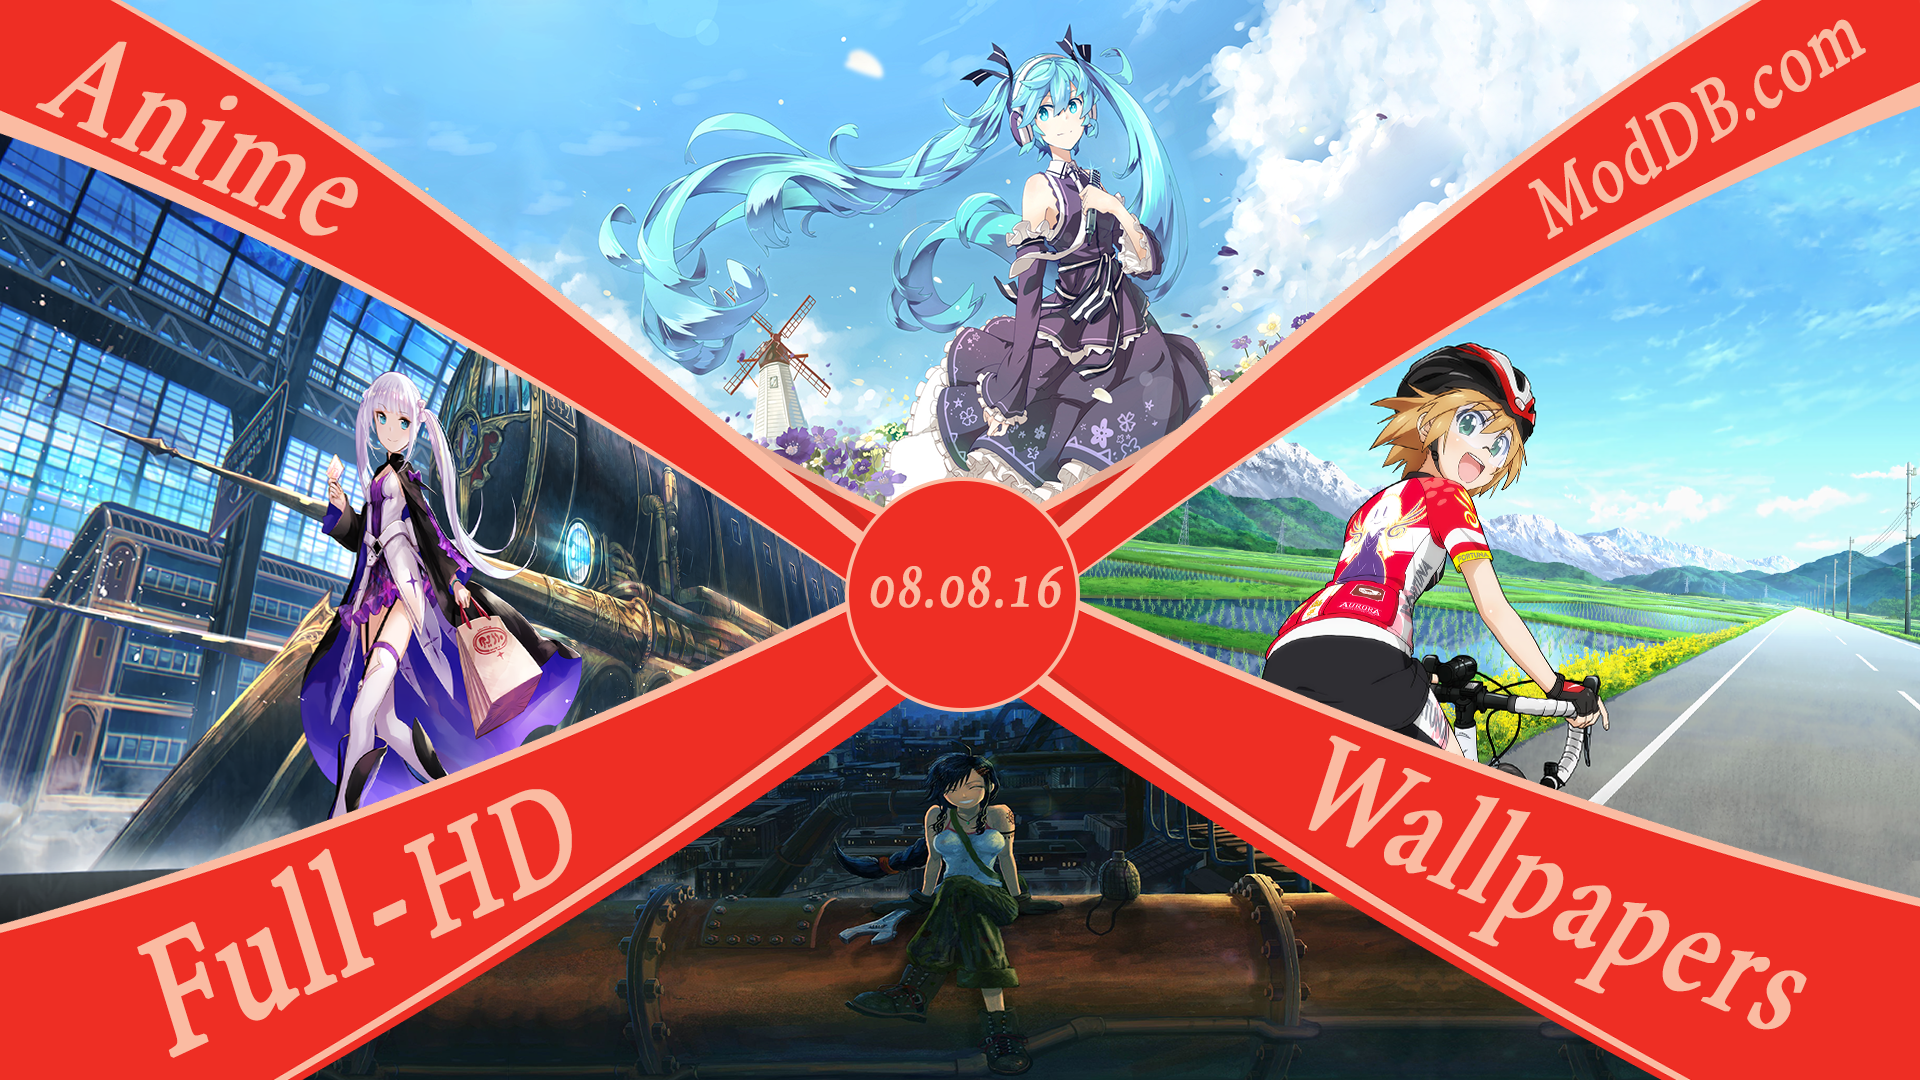 Old Anime Wallpaper's (Full-HD) - 13.11.13 file - Animes' Heaven - ModDB